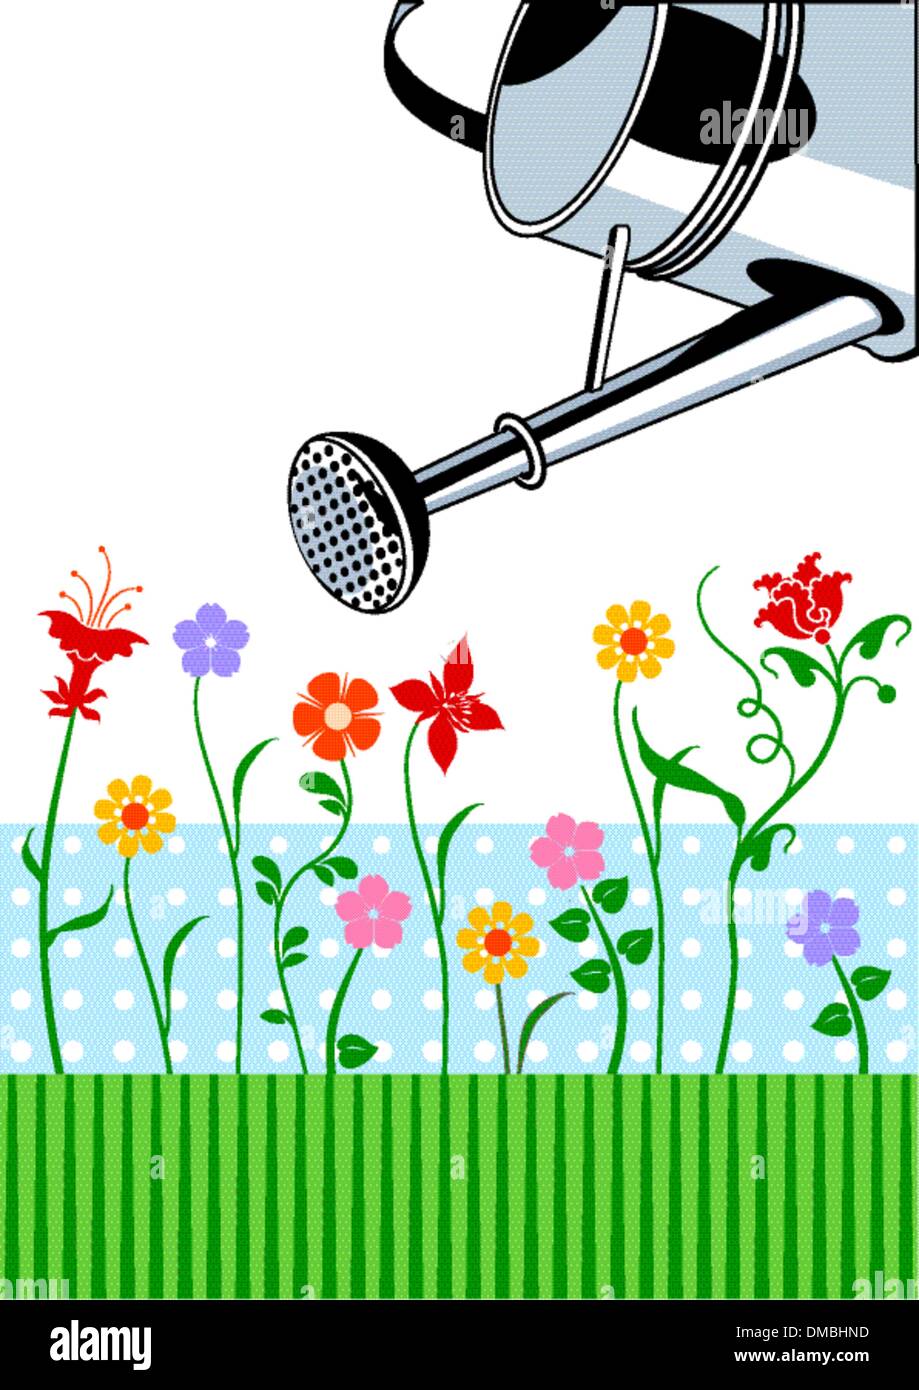 Garden maintenance and watering flowers Stock Vector